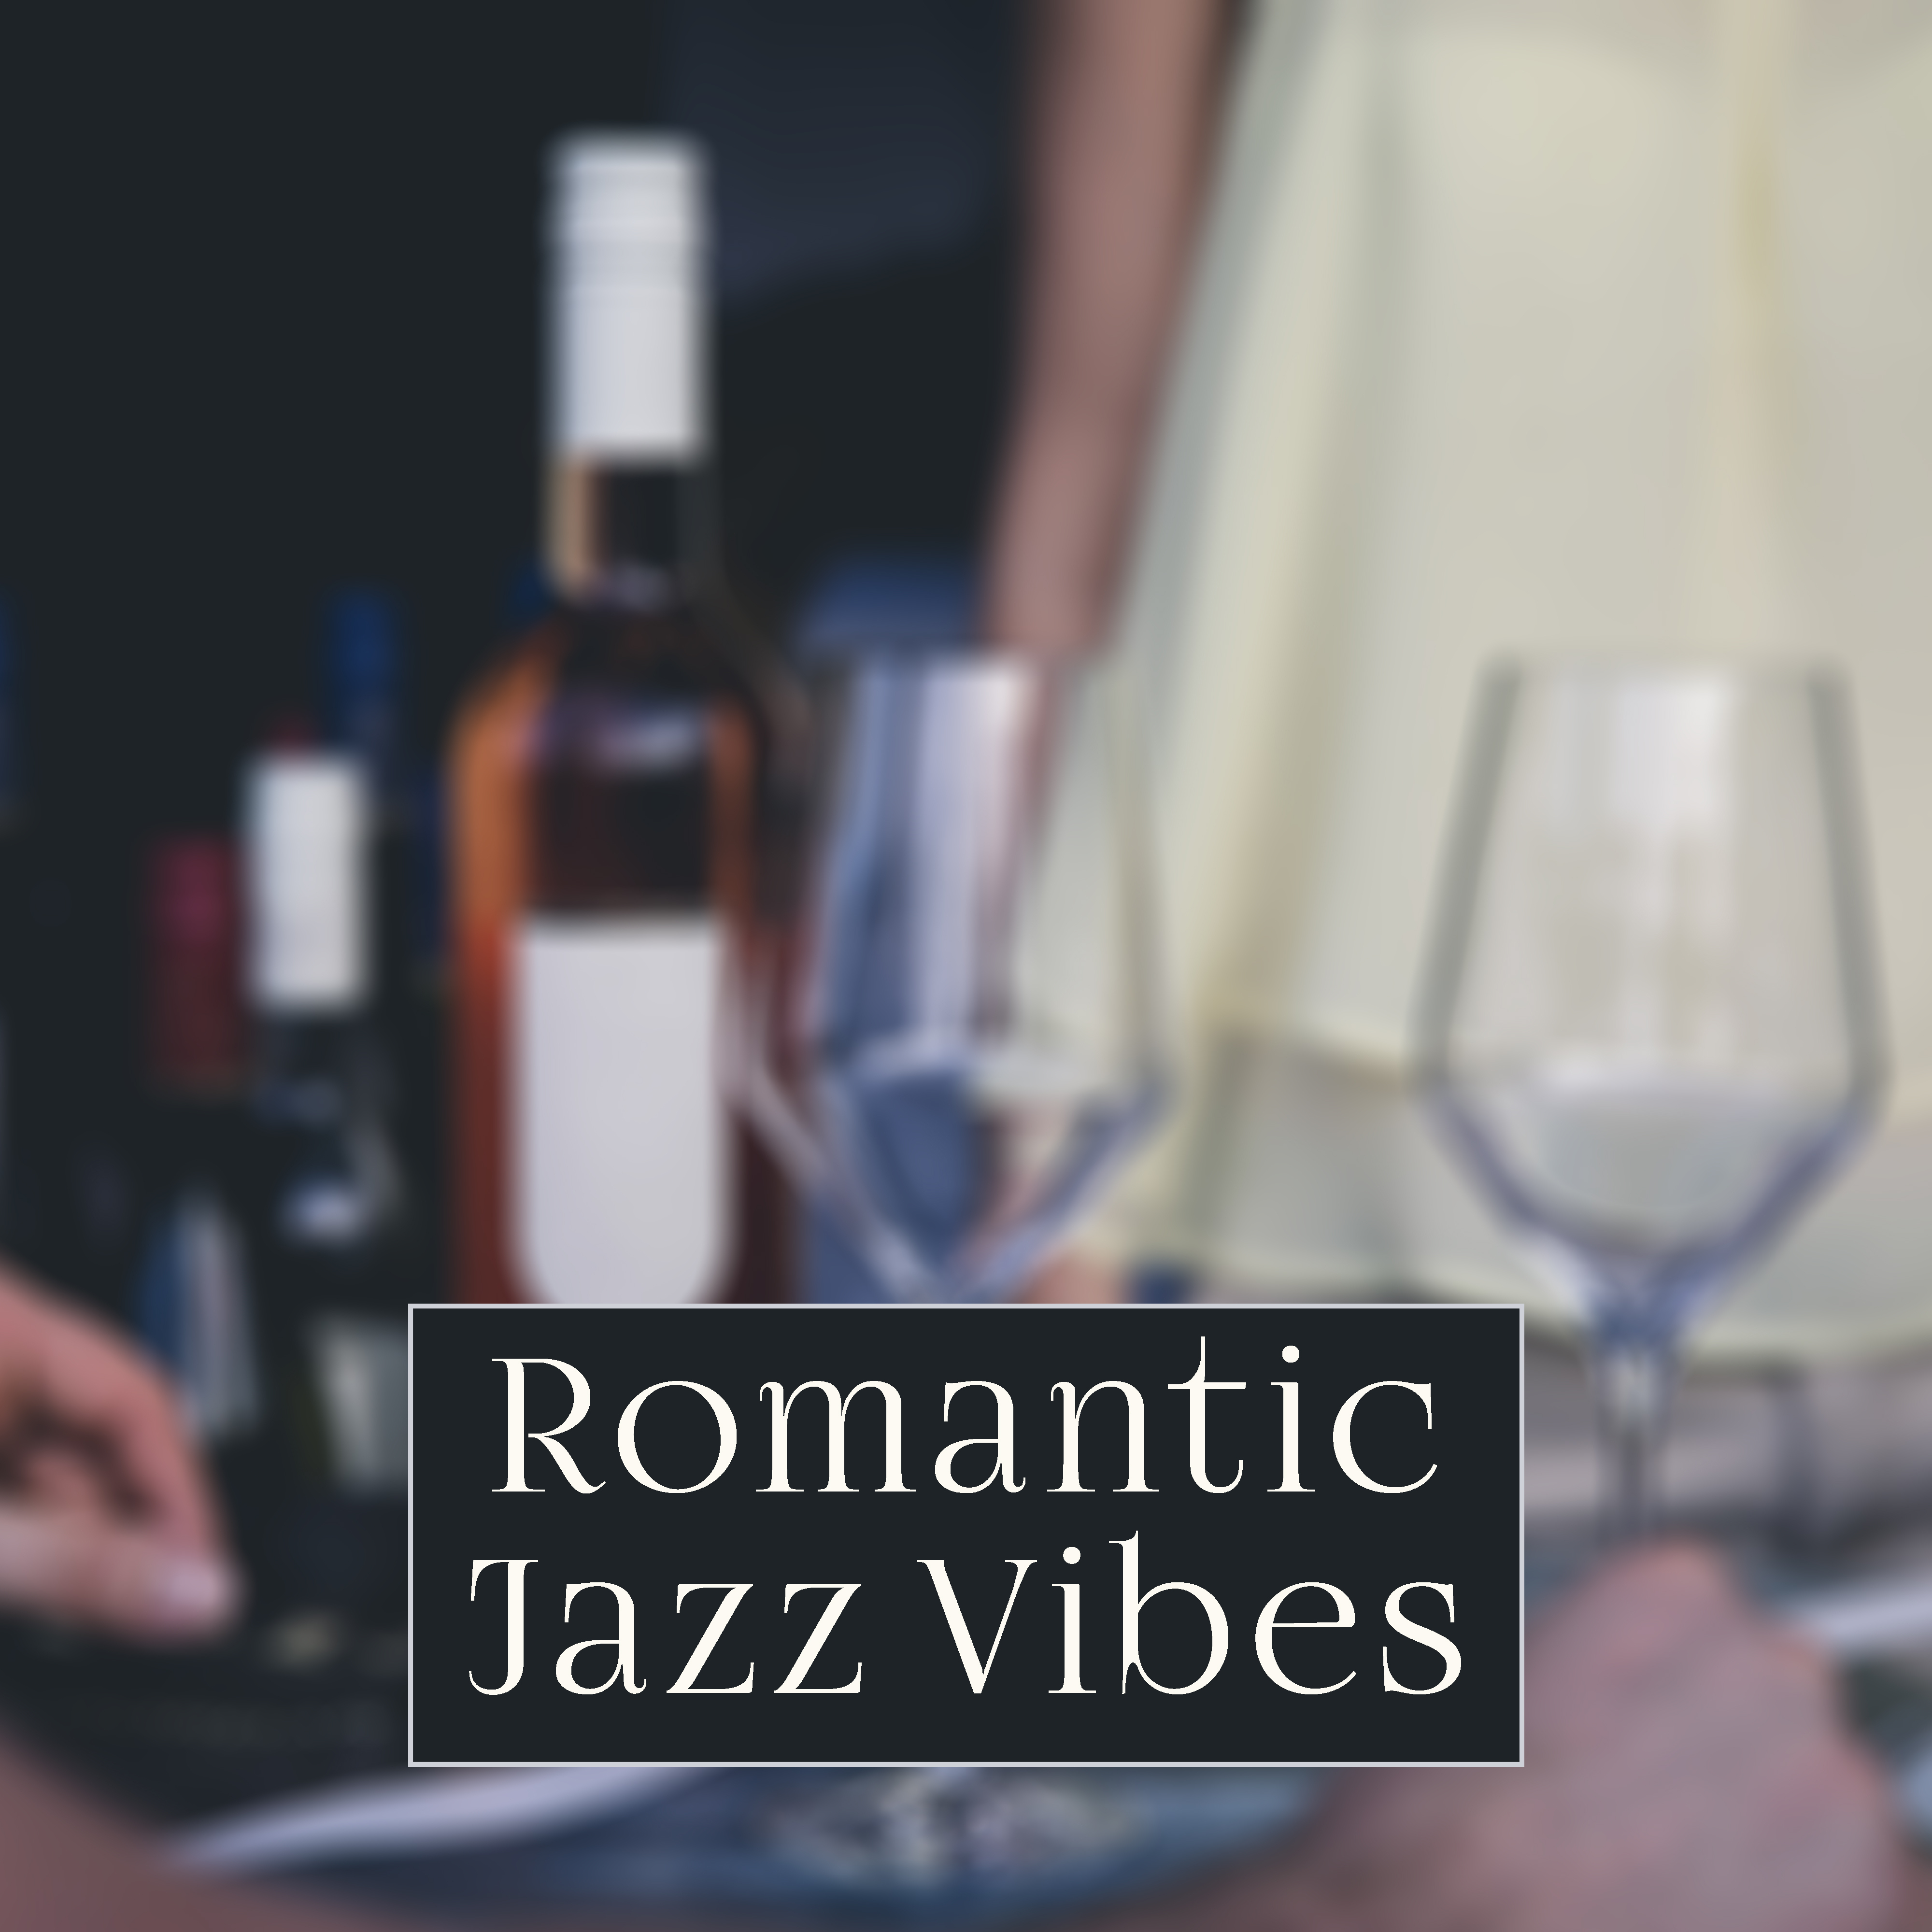 Romantic Jazz Vibes – Instrumental Jazz, Background for Family Dinner, Special Date, Restaurant Music